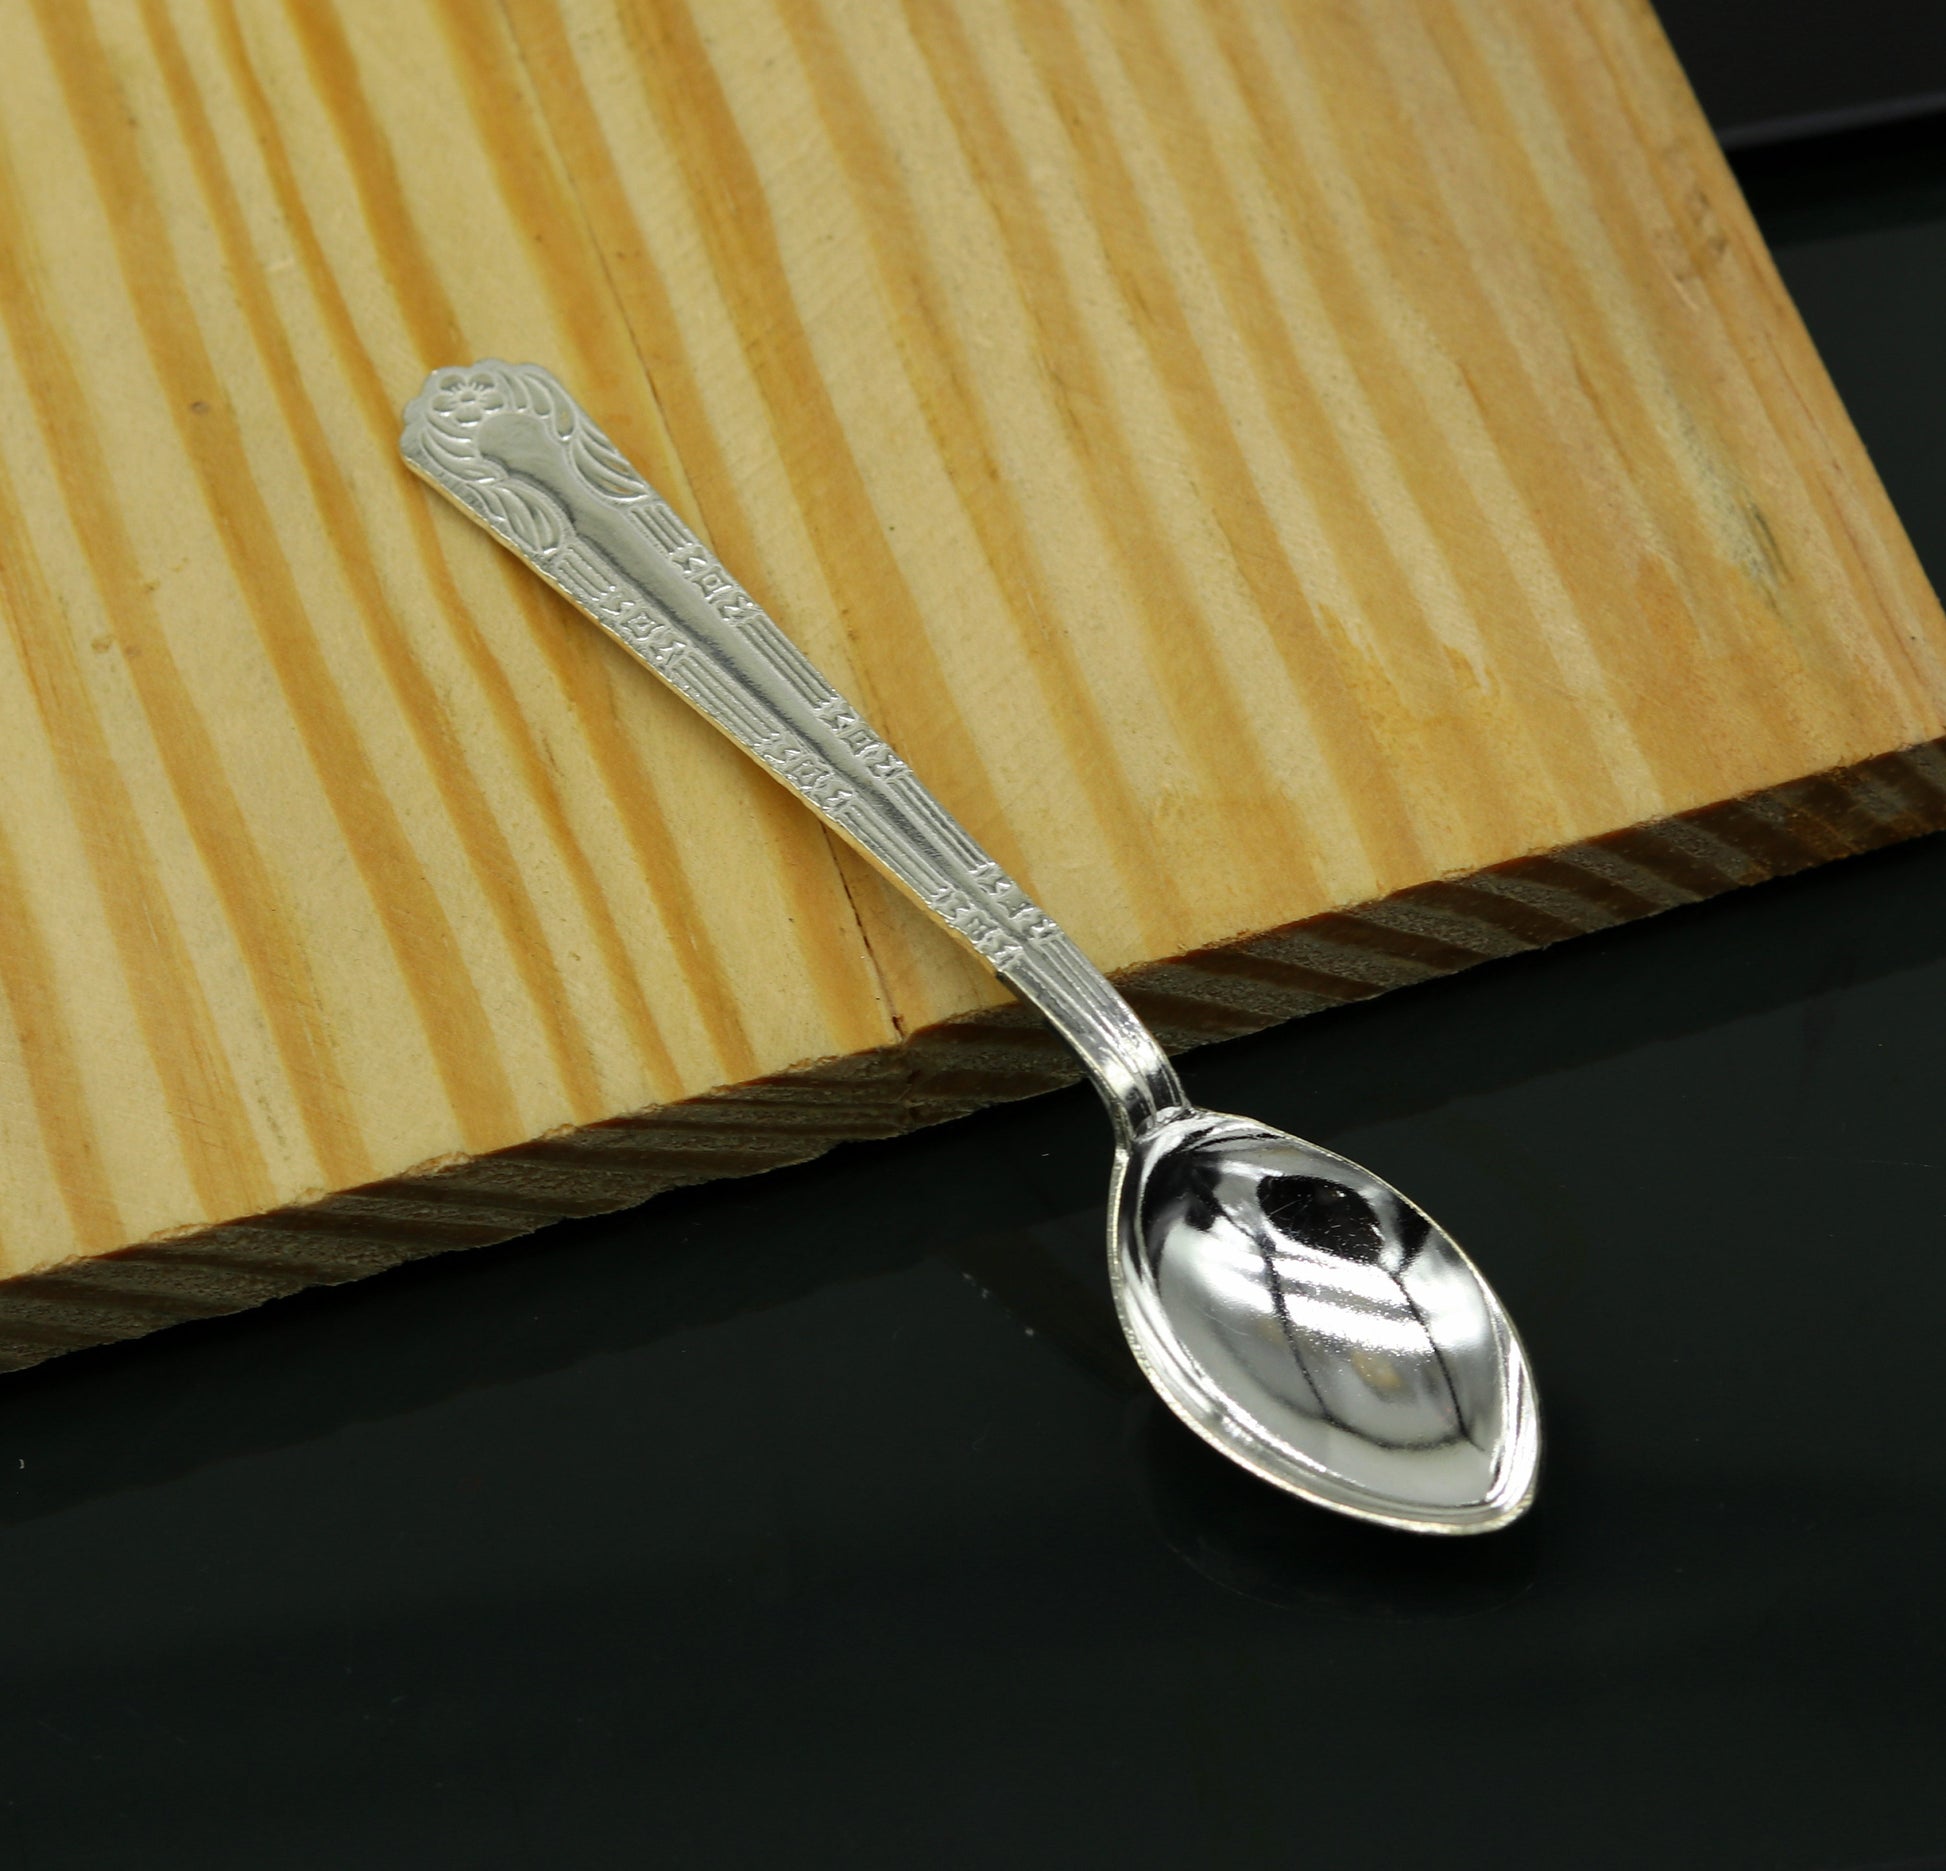 fabulous sterling silver handmade solid silver 5" spoon kitchen utensils, vessels, silver has antibacterial properties, stay healthy sv59 - TRIBAL ORNAMENTS